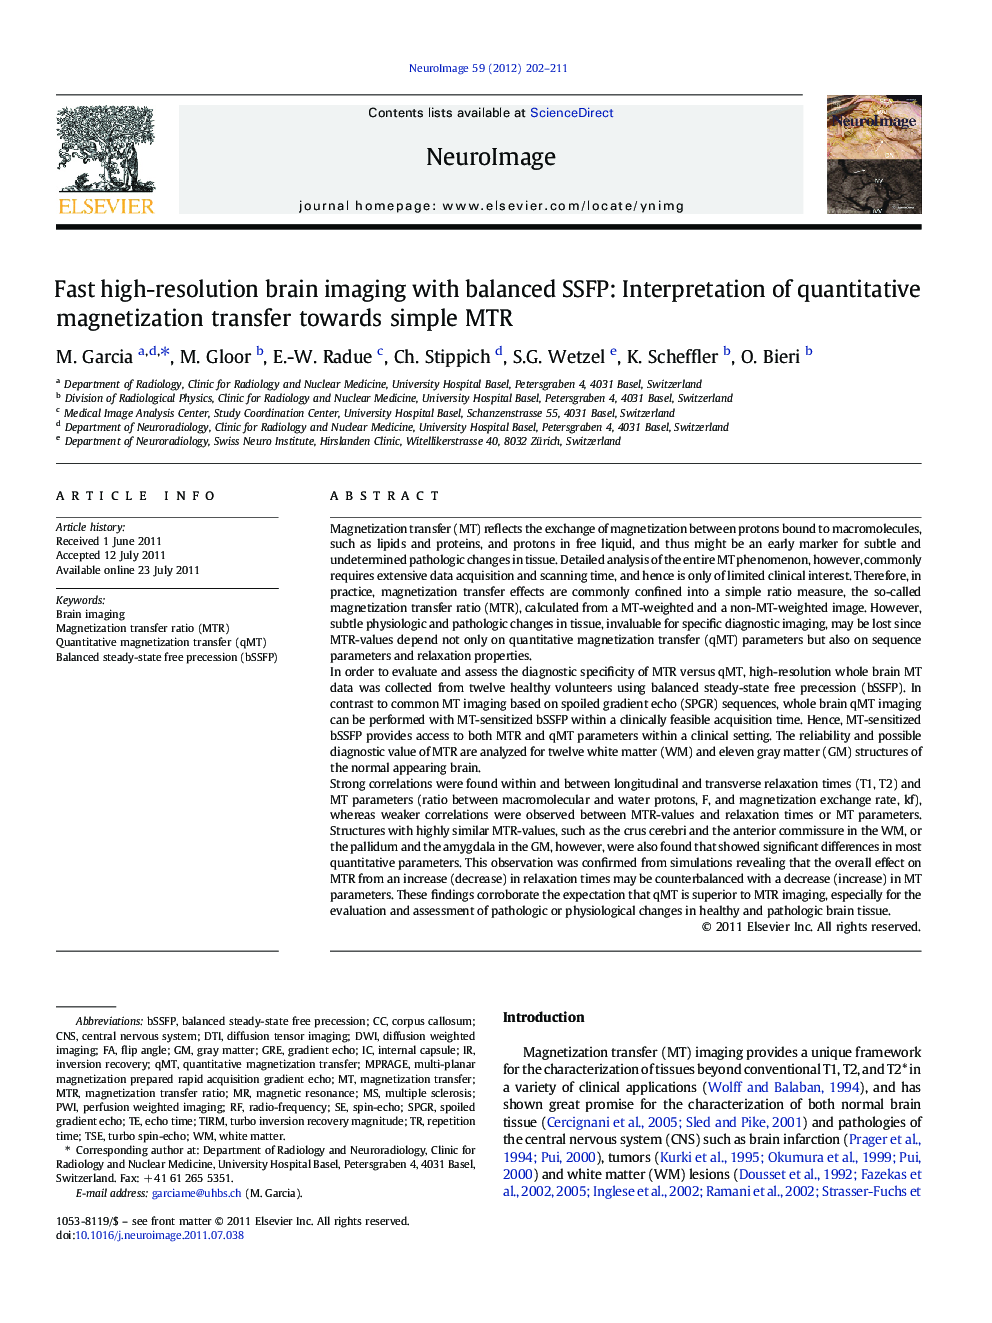 Fast high-resolution brain imaging with balanced SSFP: Interpretation of quantitative magnetization transfer towards simple MTR